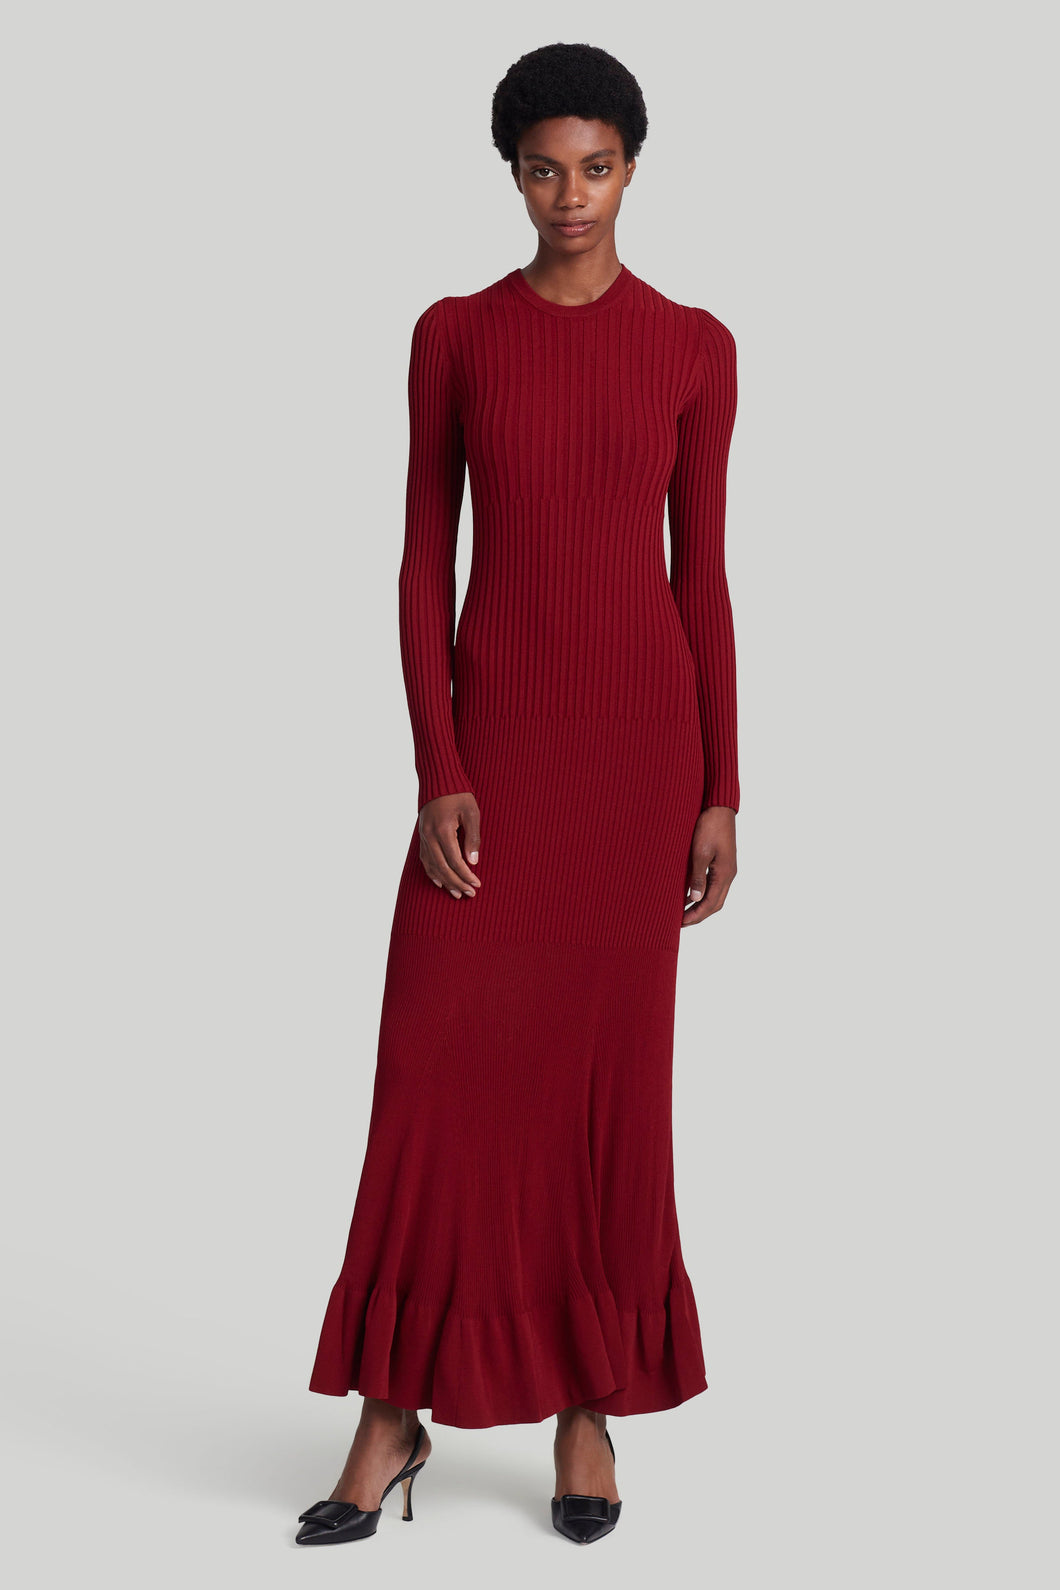 Altuzarra_'Seyrig' Dress_Garnet